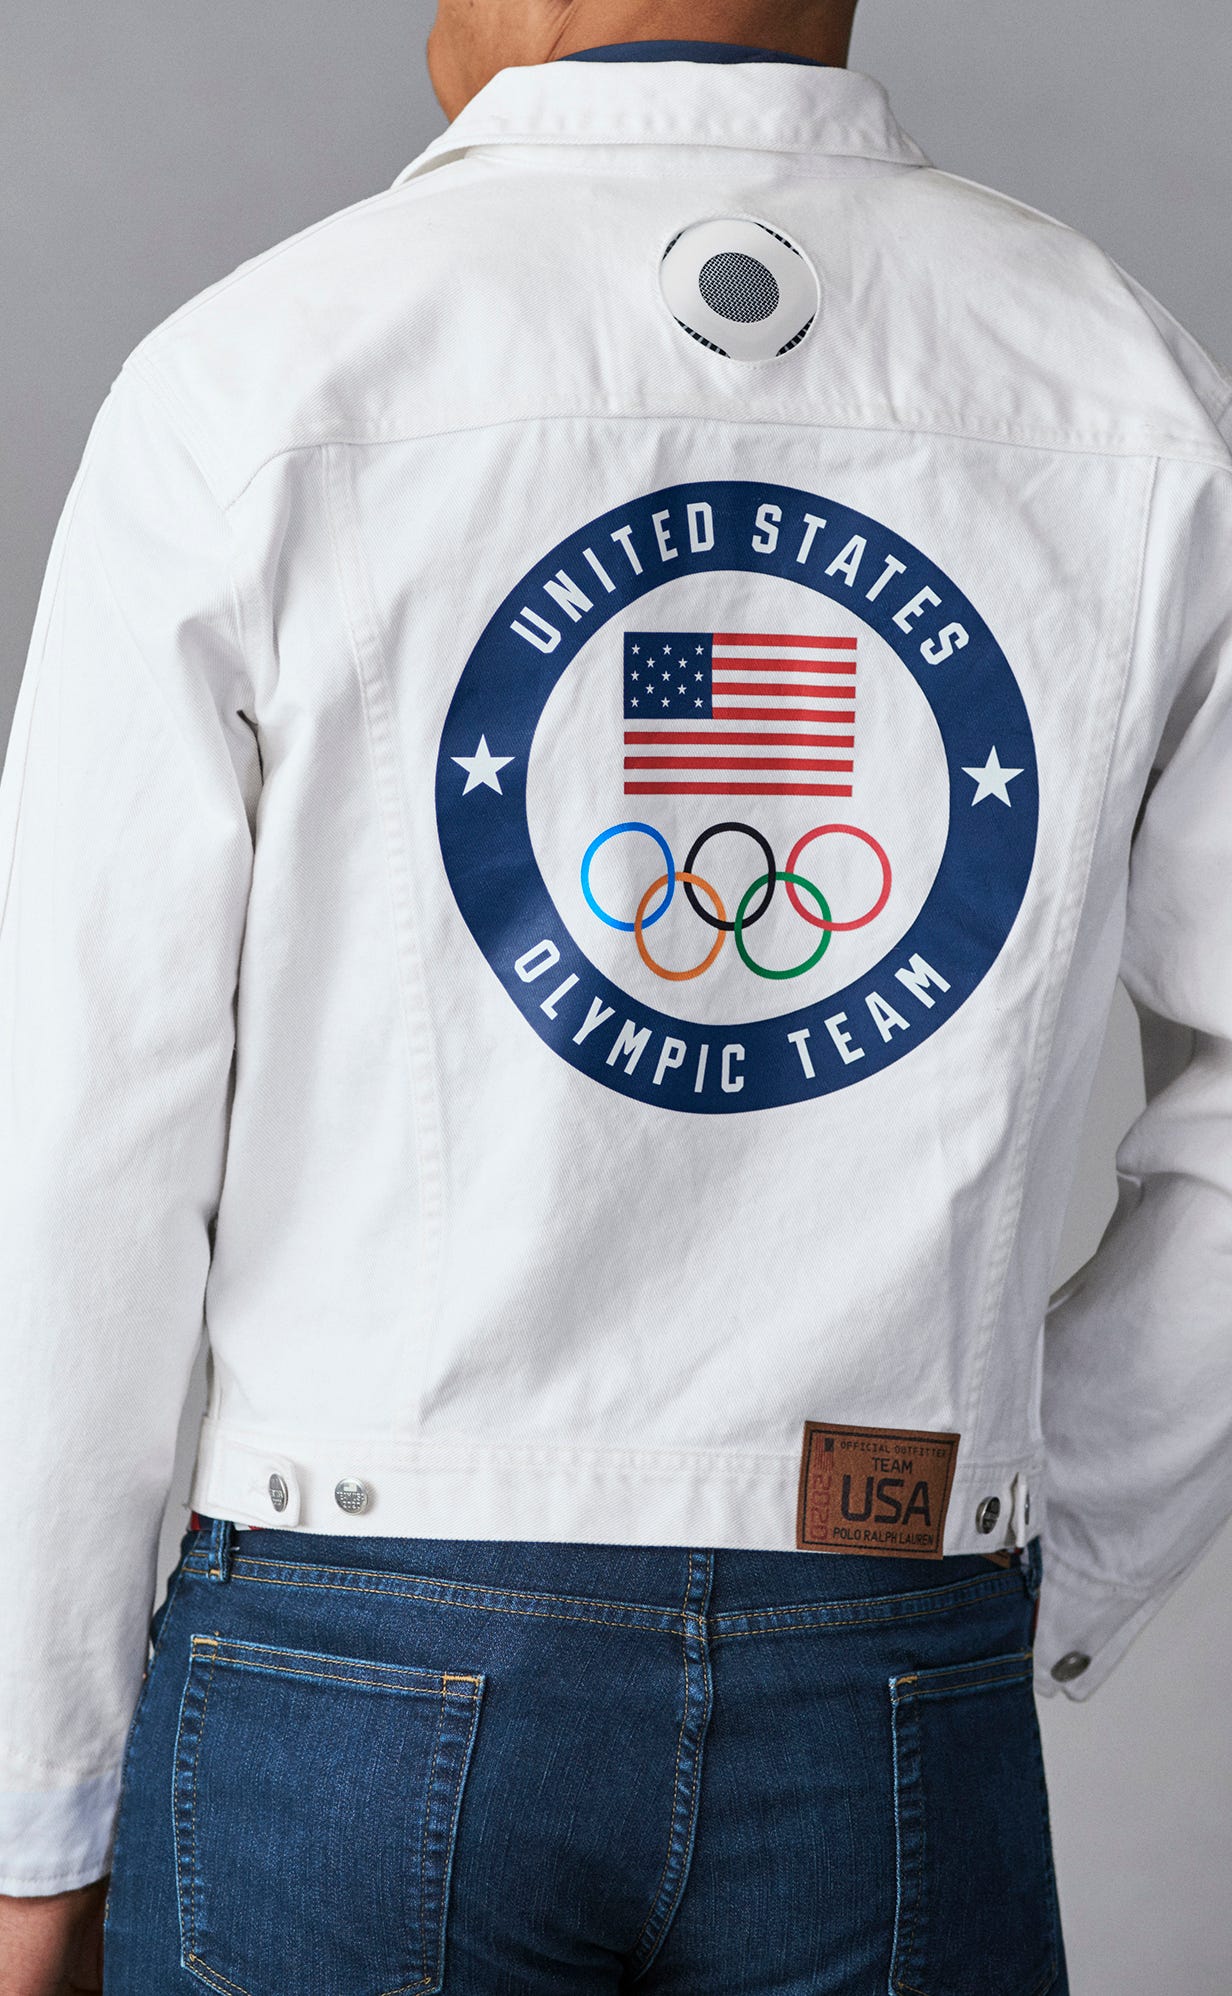 Ralph Lauren unveils Team USA opening ceremony uniform, cooling jacket